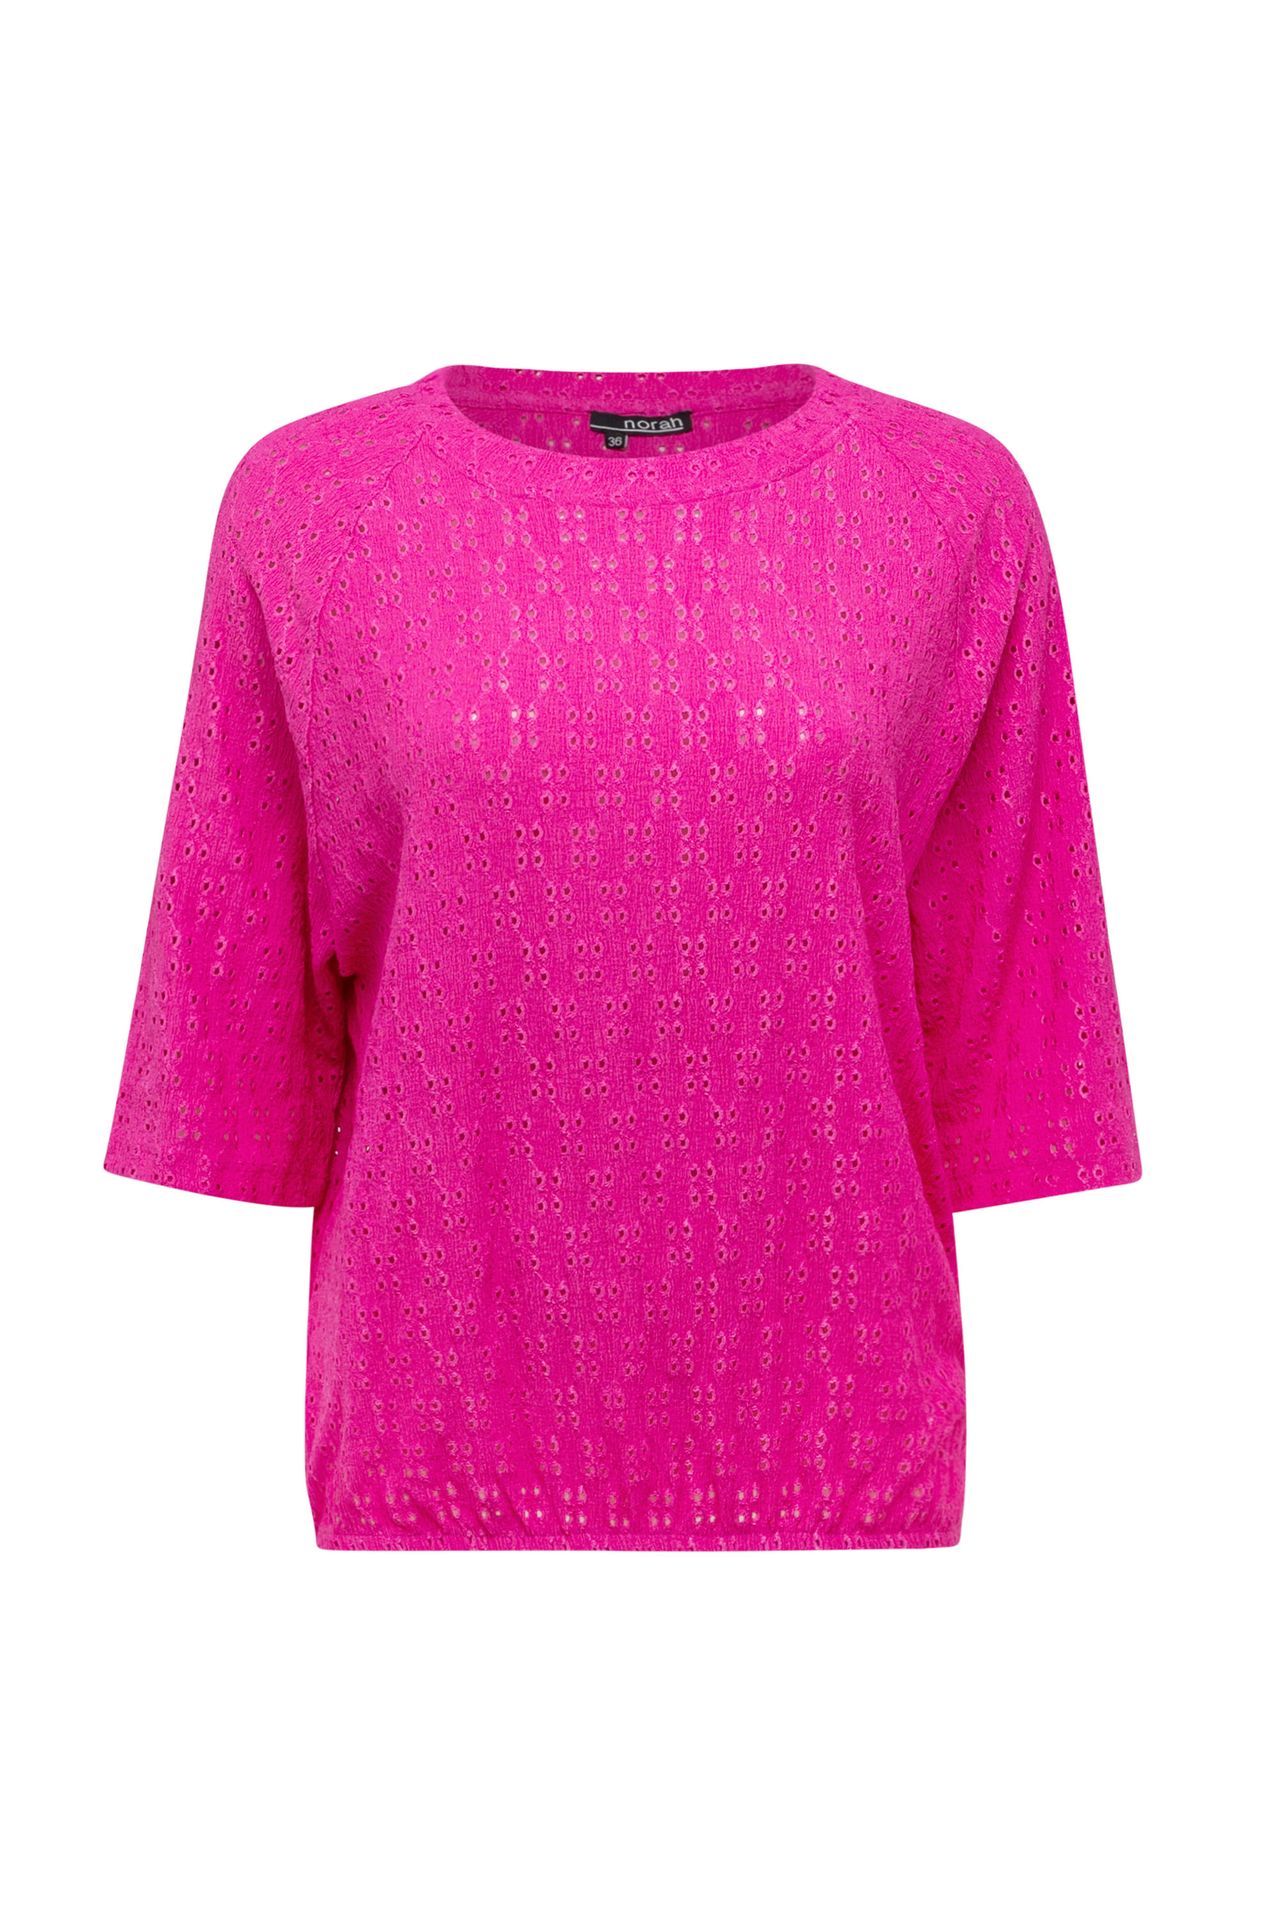 Norah Fuchsia shirt embroidery geranium 213617-664